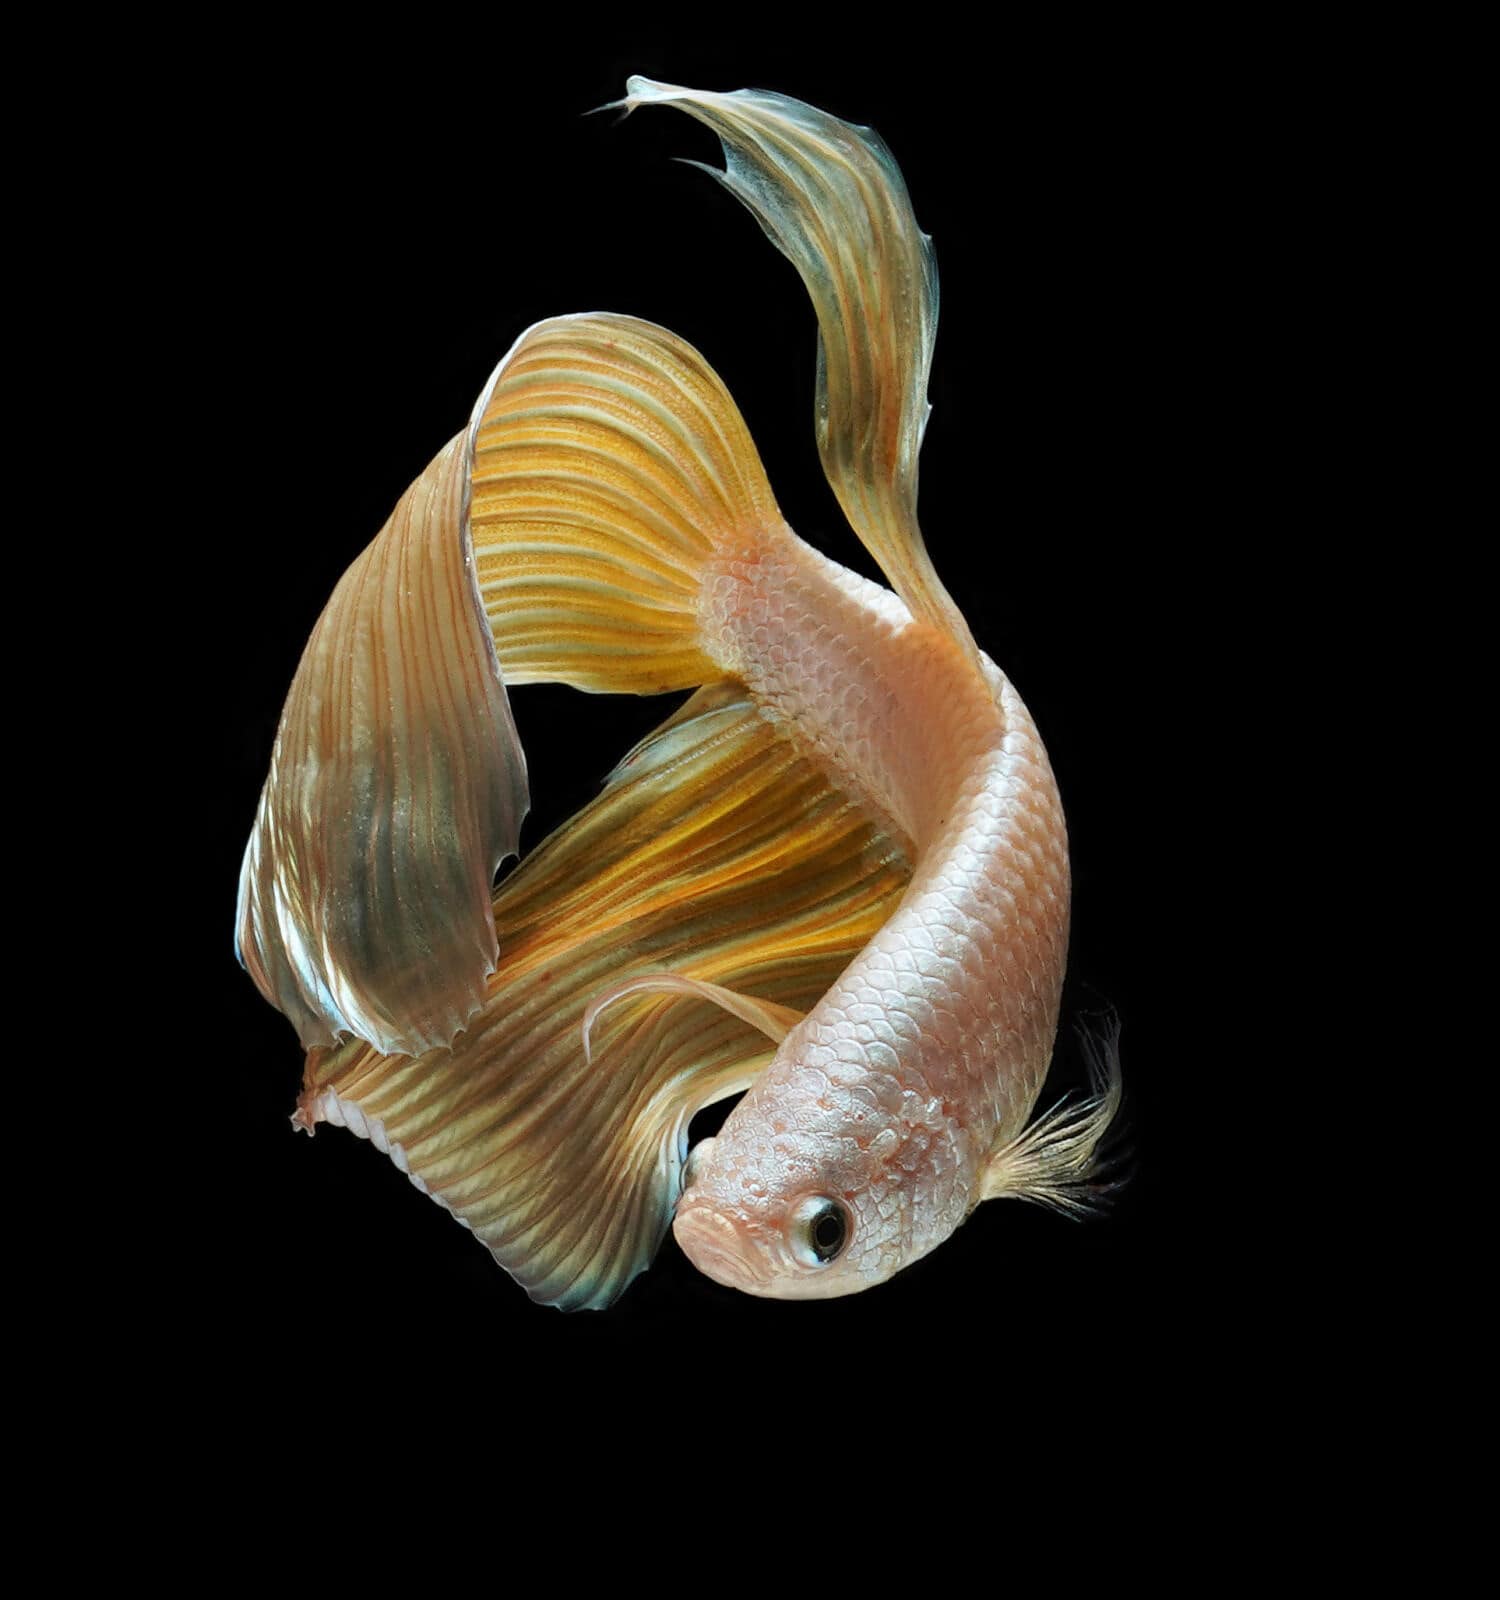 Gold Veilteil betta fish for your fancy fish tank